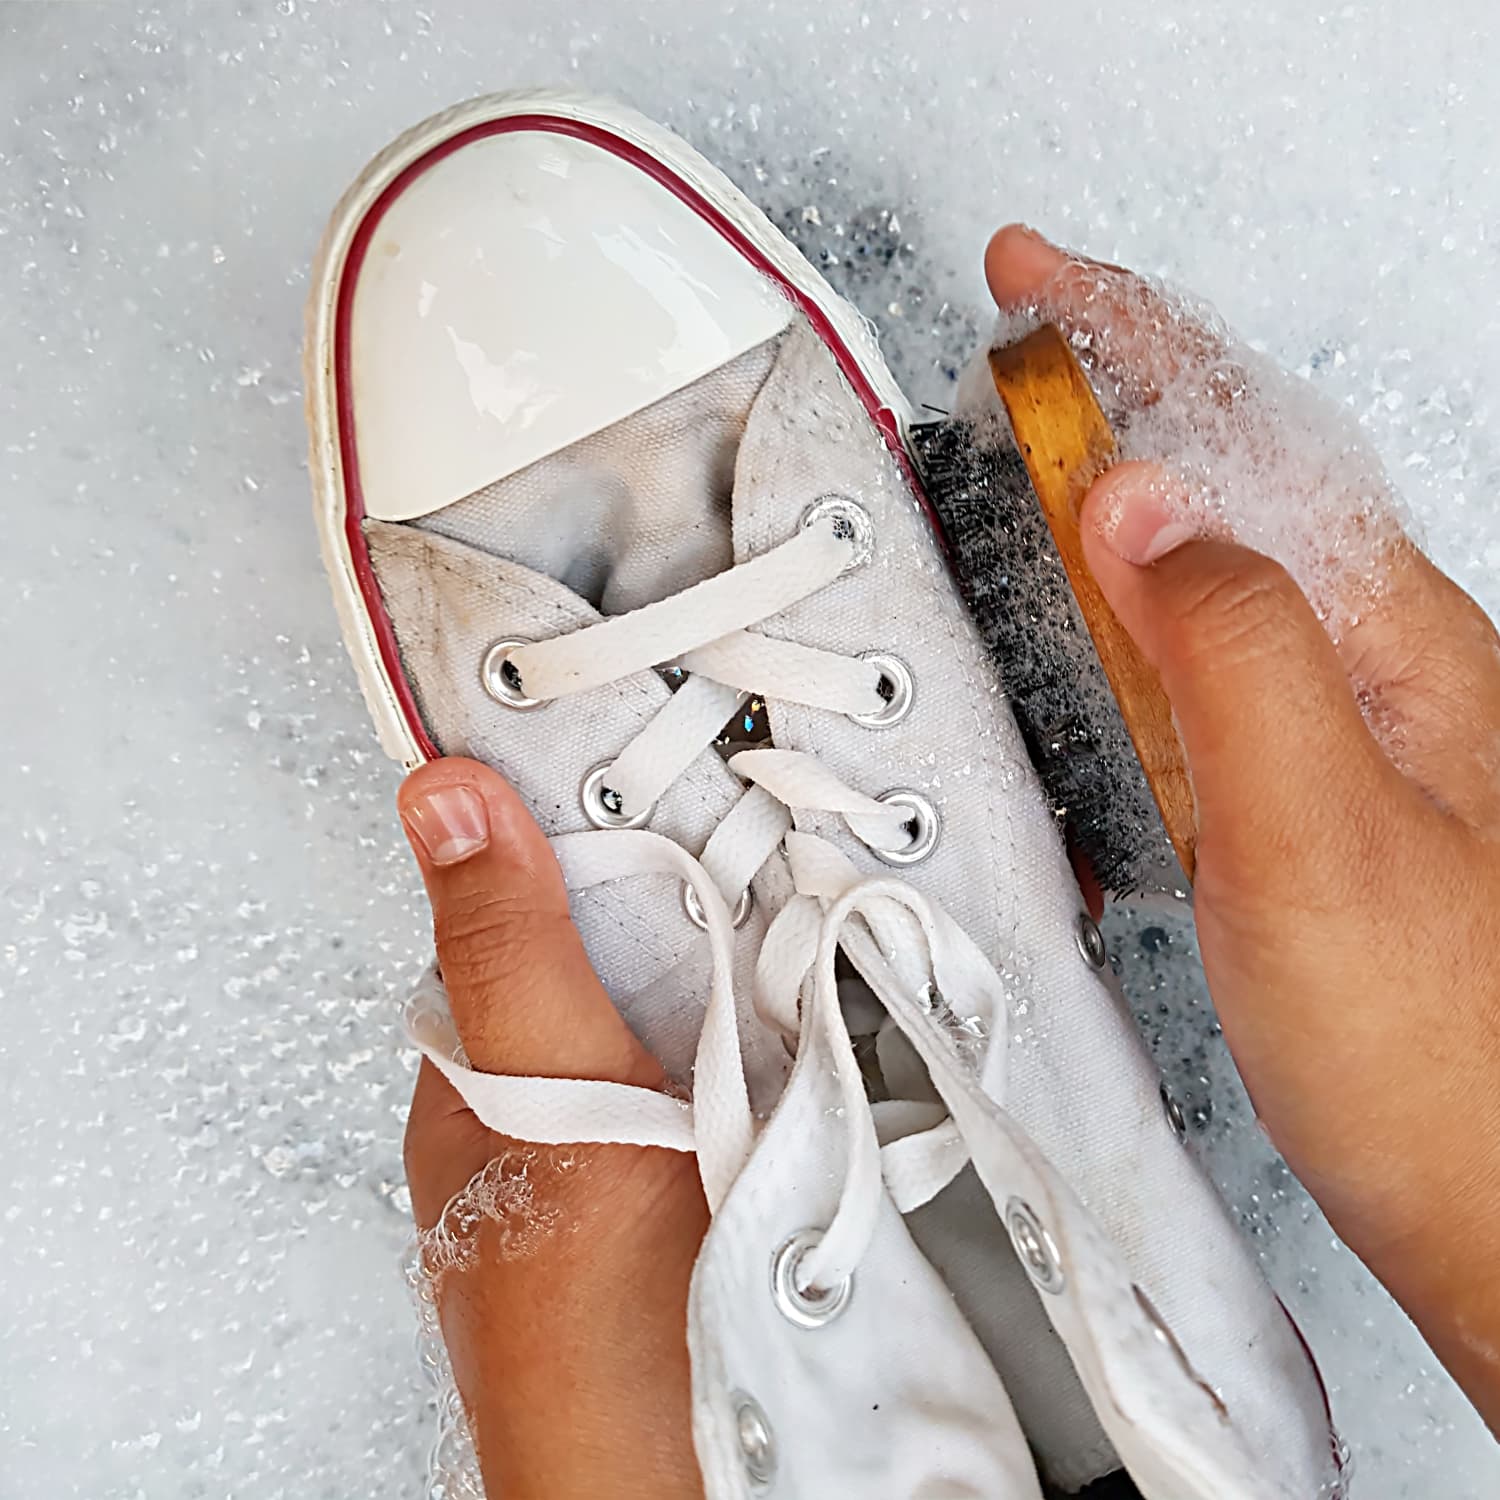 can vinegar clean shoes, SAVE 68% - huertosdecotzocon.com